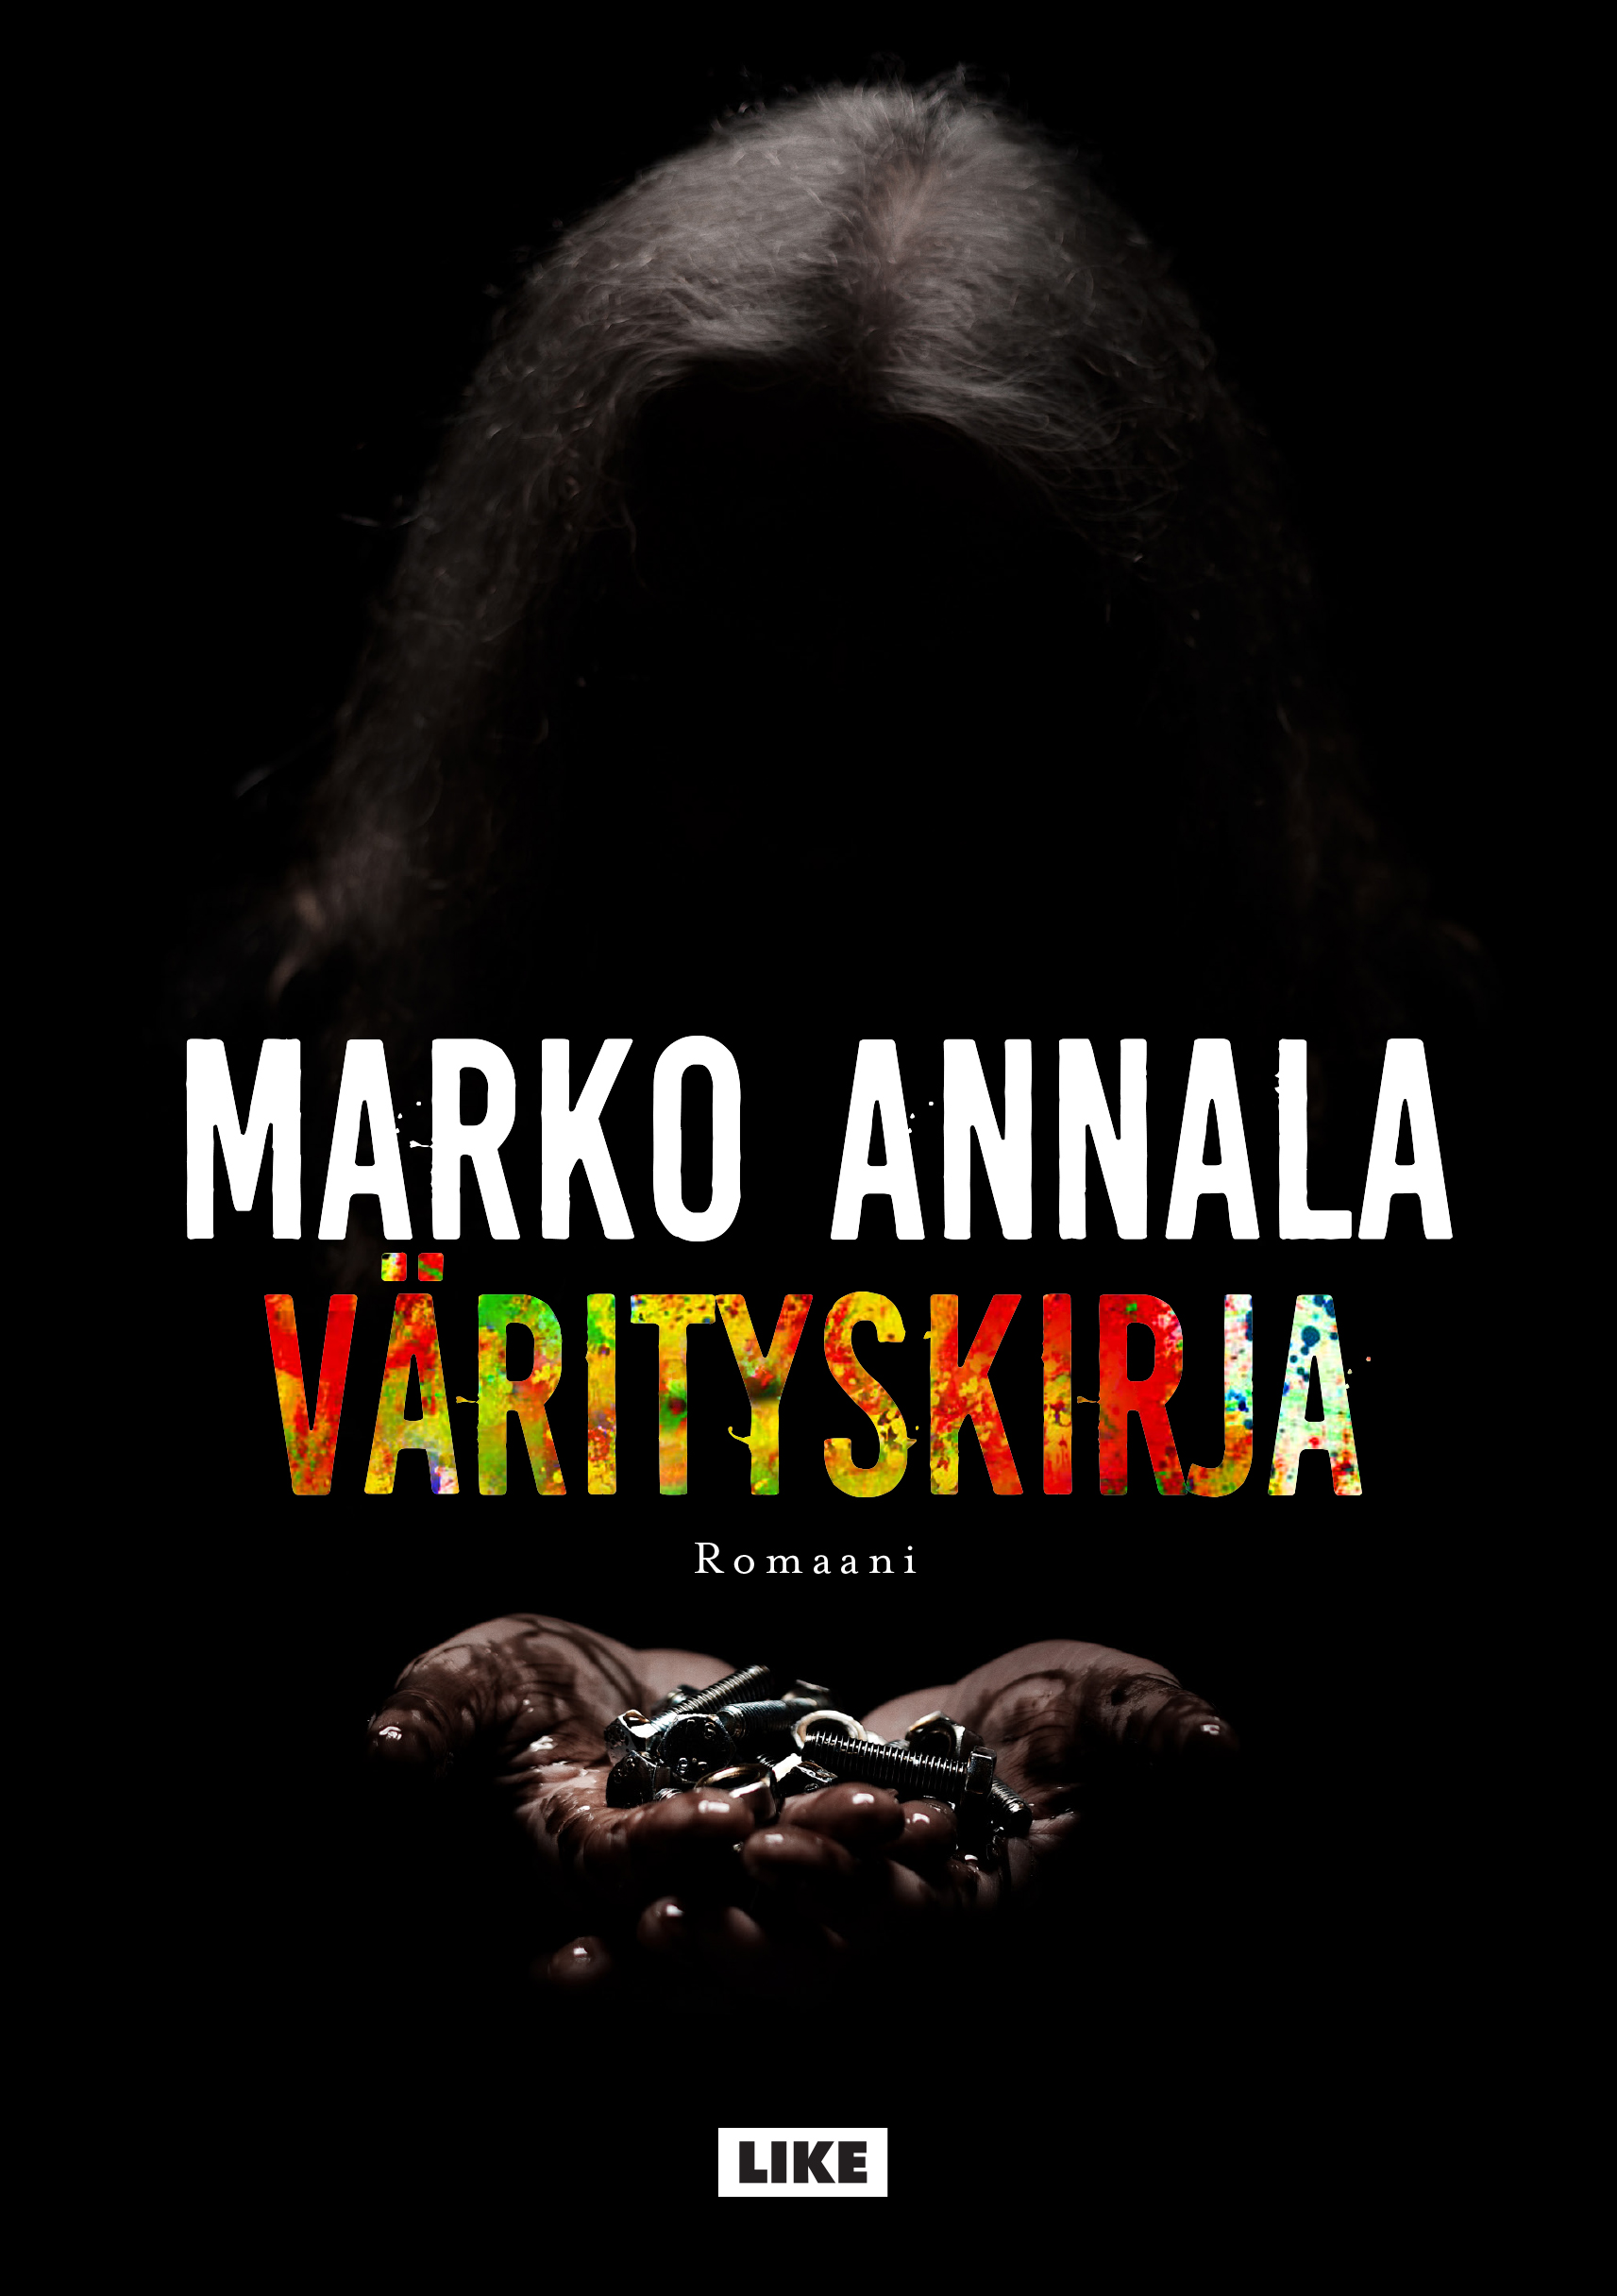 Marko Annala: Värityskirja (2017, Like Publishing)